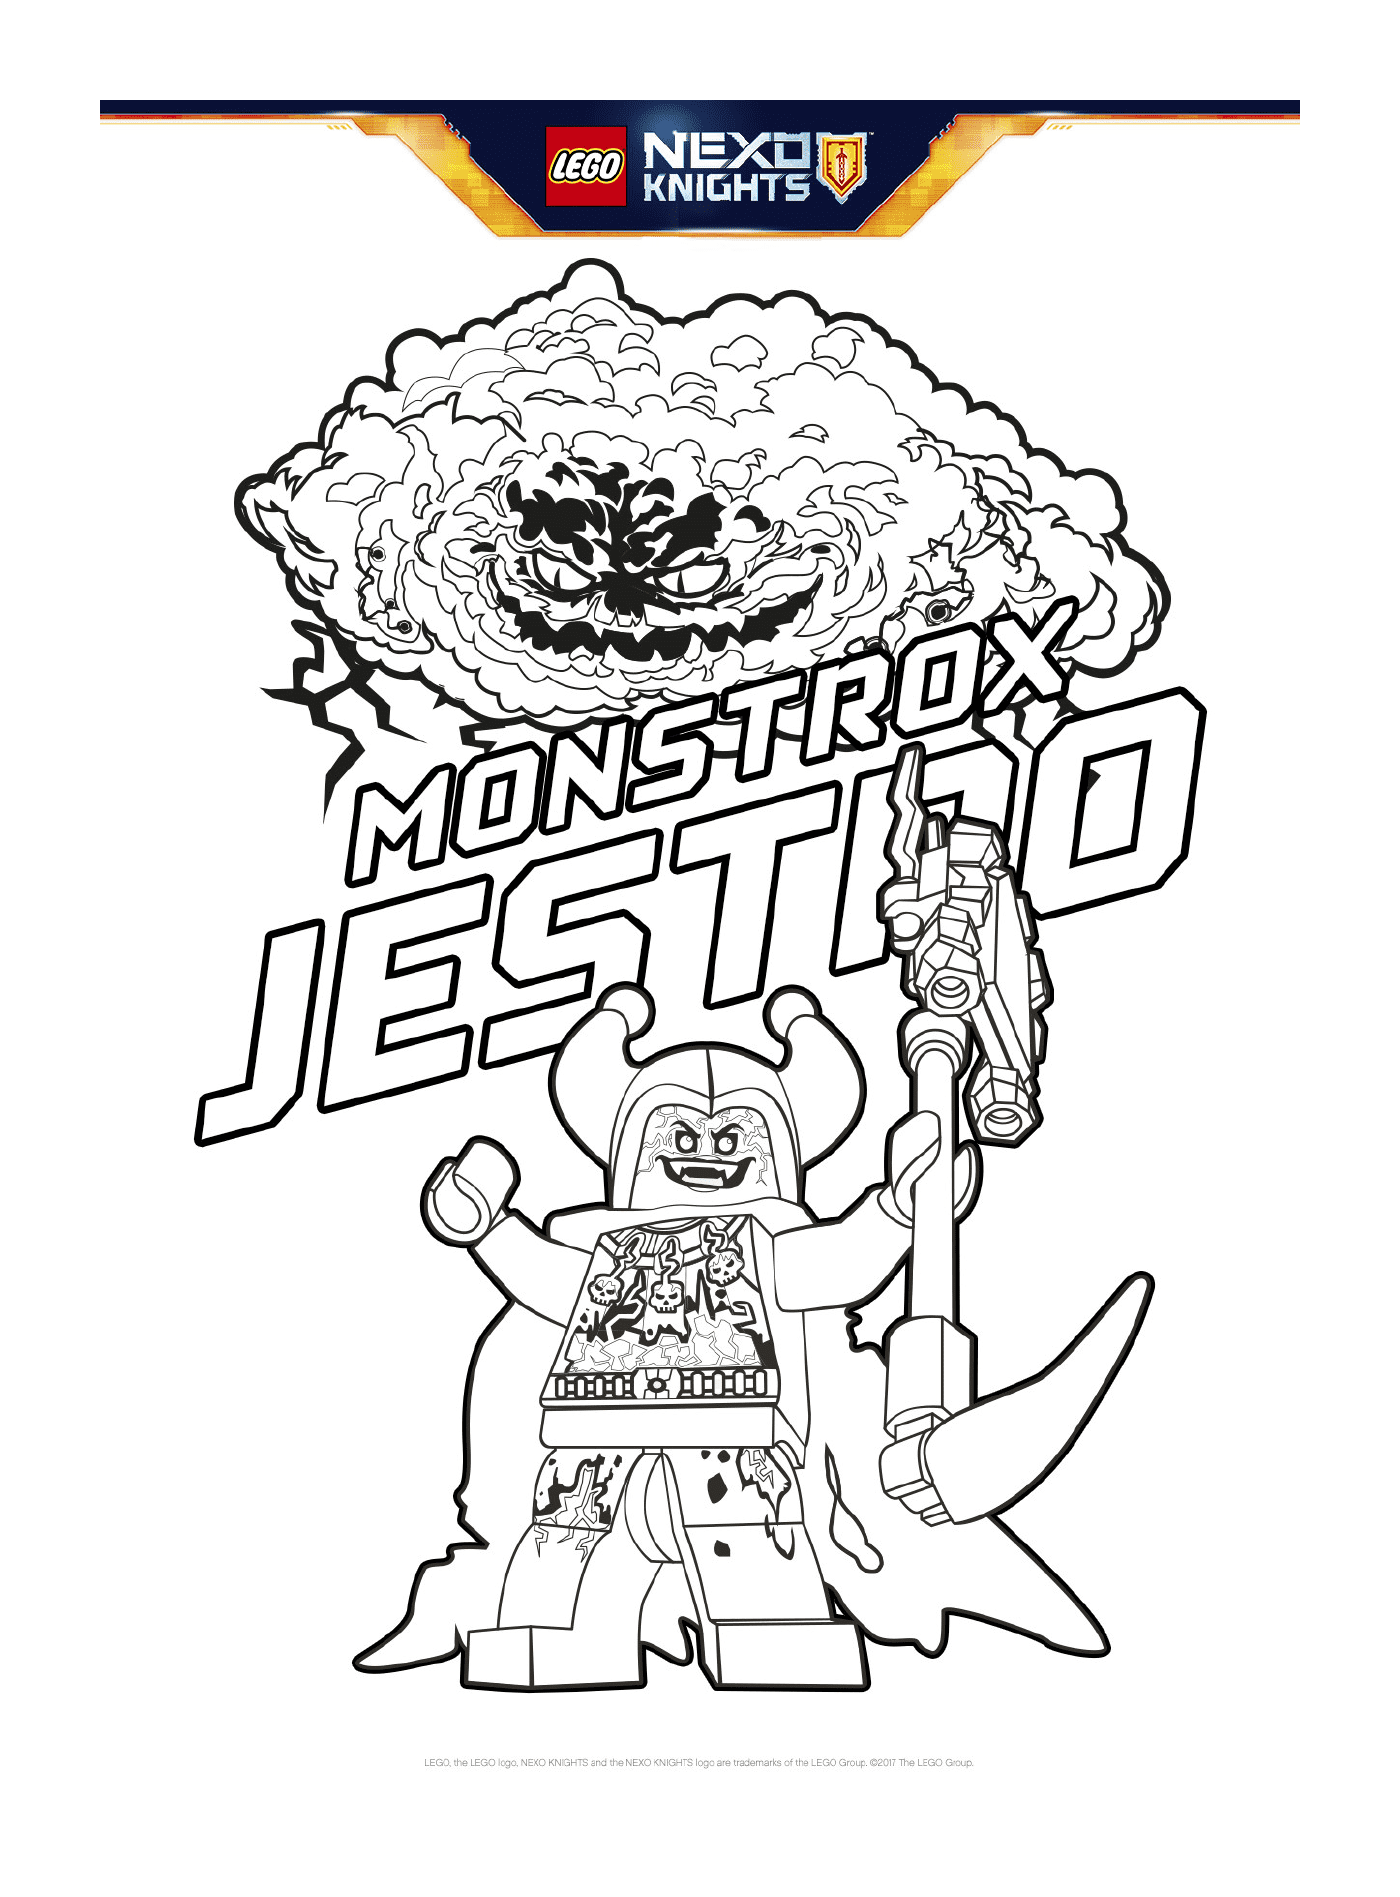  Monstrox Jessro Nexo Ritter LEGO 